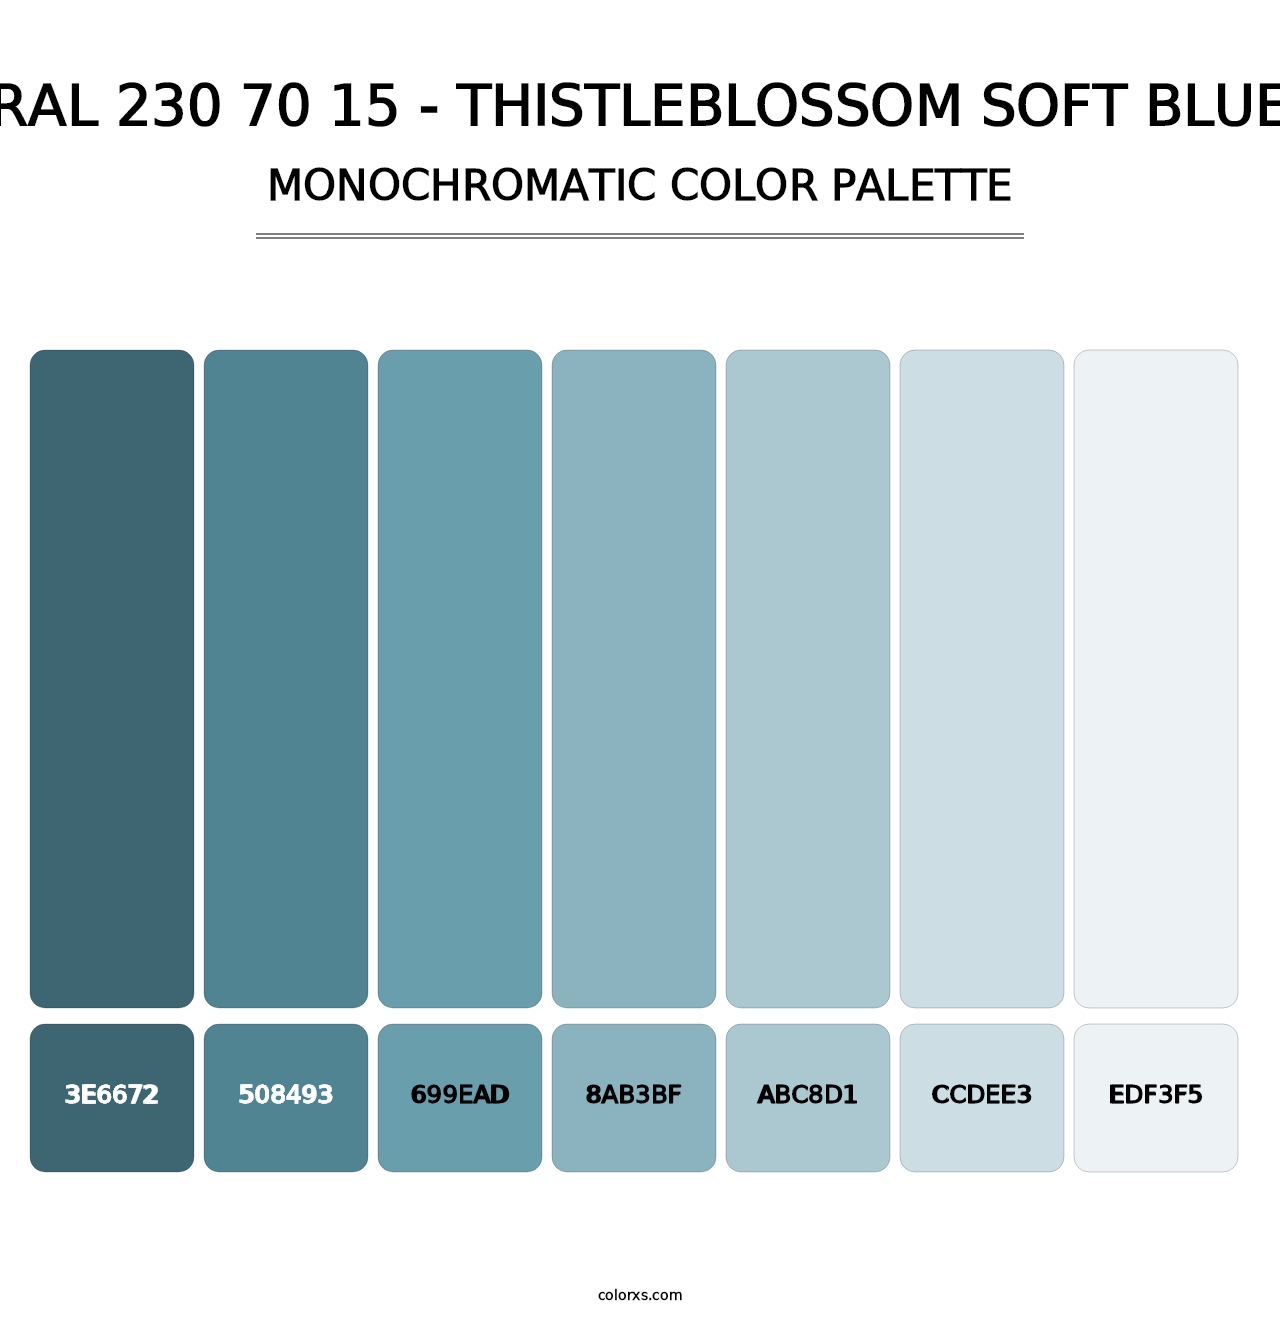 RAL 230 70 15 - Thistleblossom Soft Blue - Monochromatic Color Palette